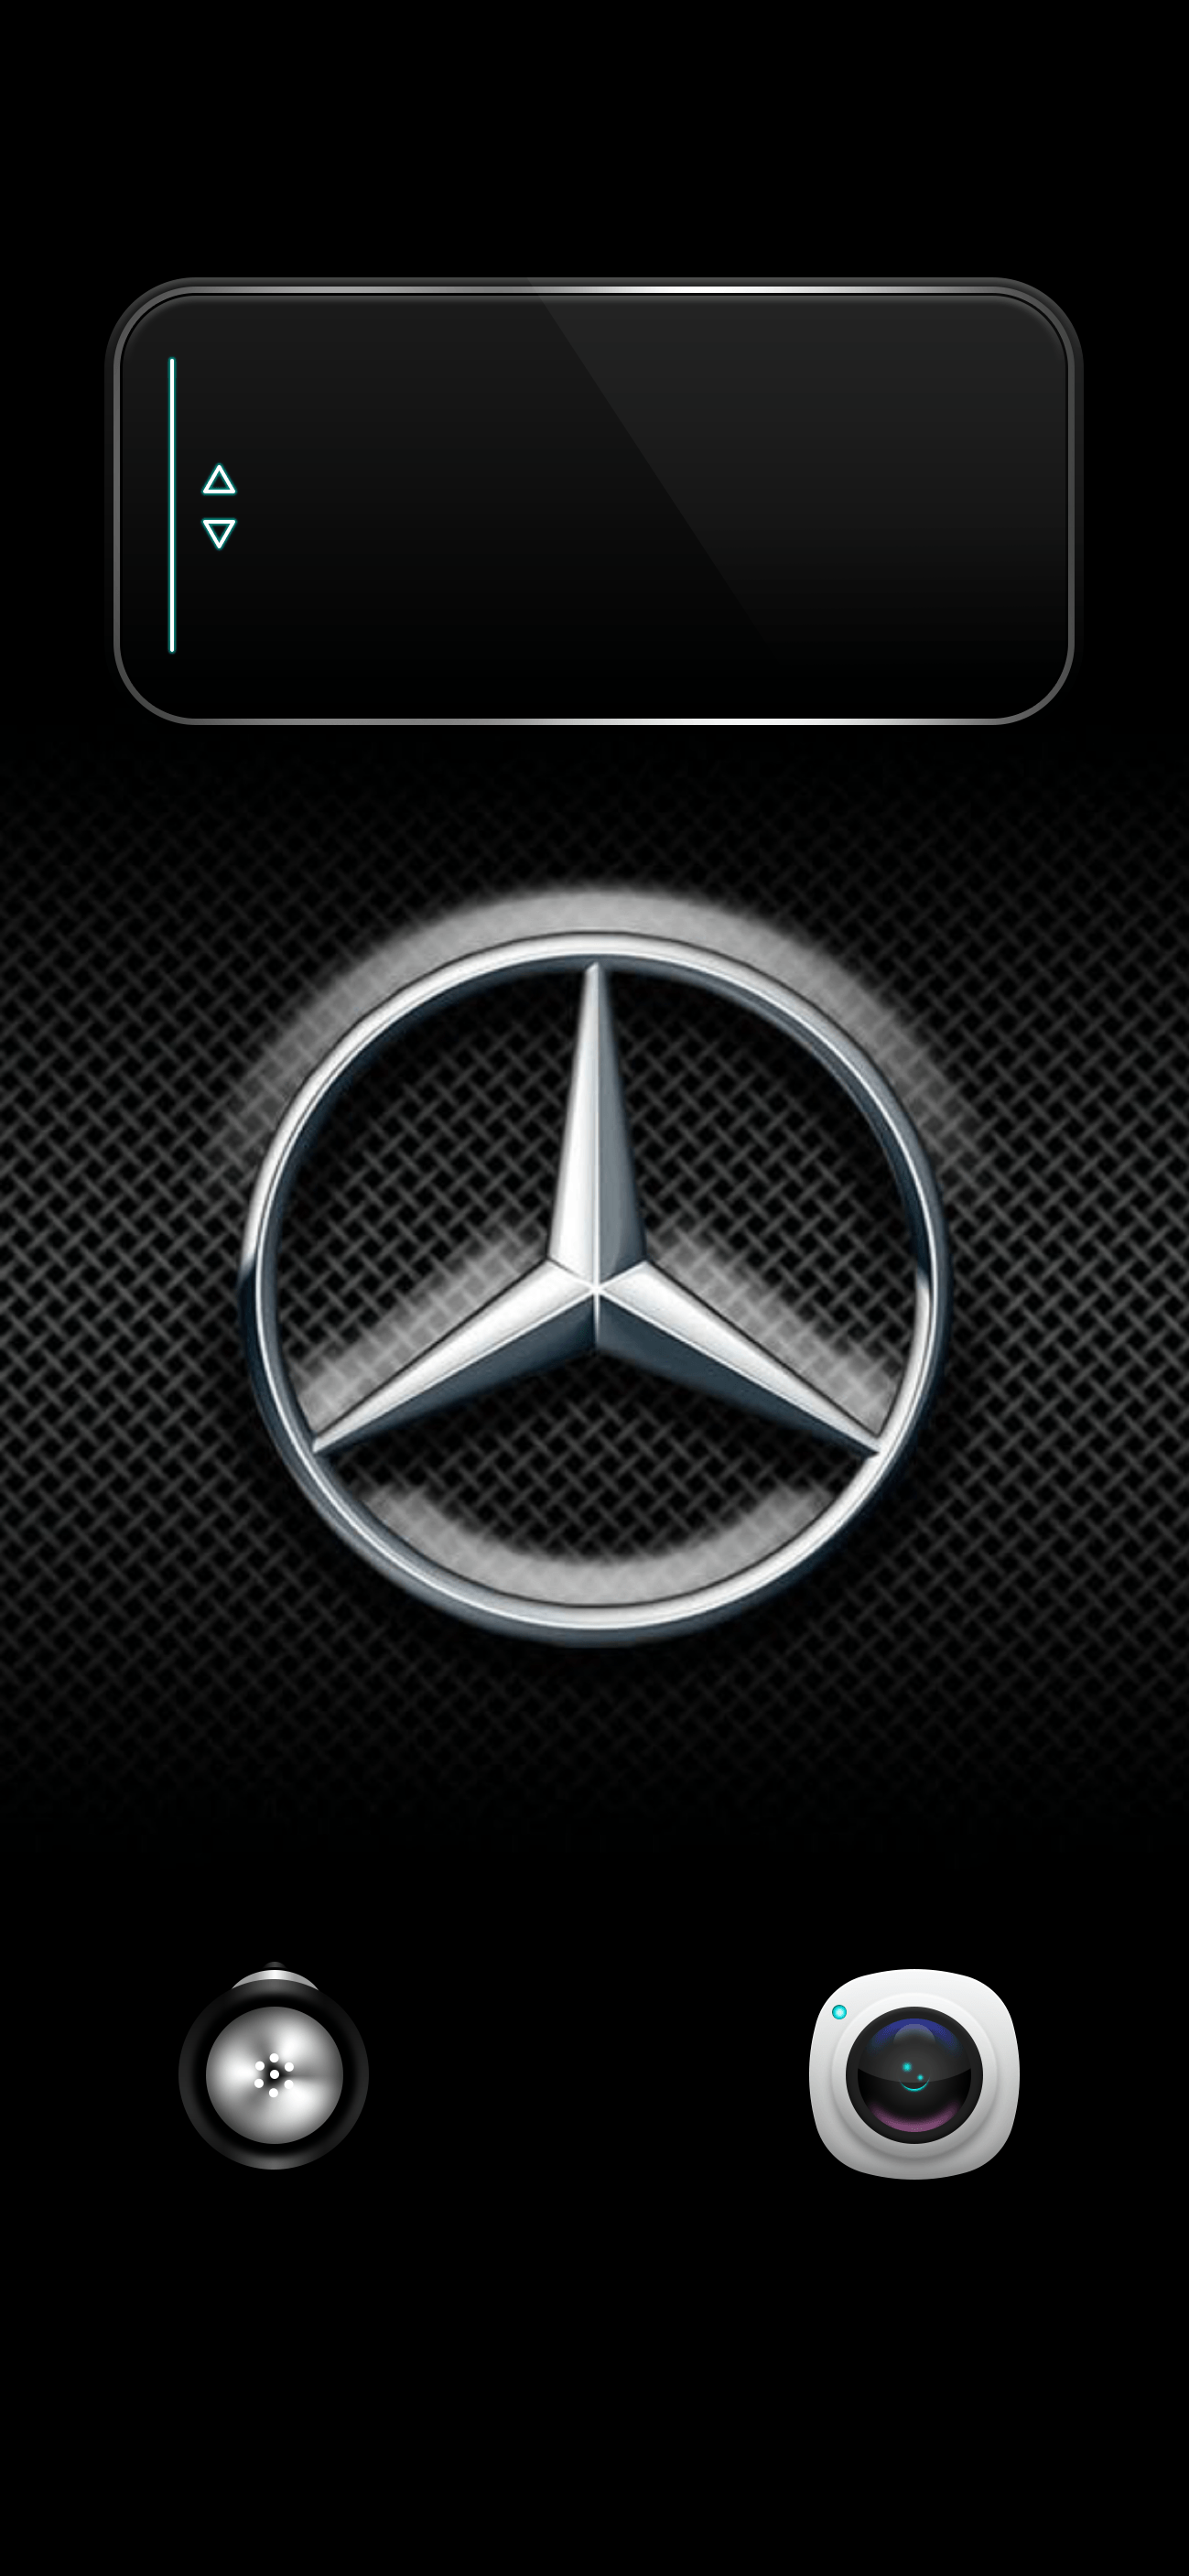 wallpaper iphone x. Mercedes wallpaper, iPhone wallpaper, iPhone